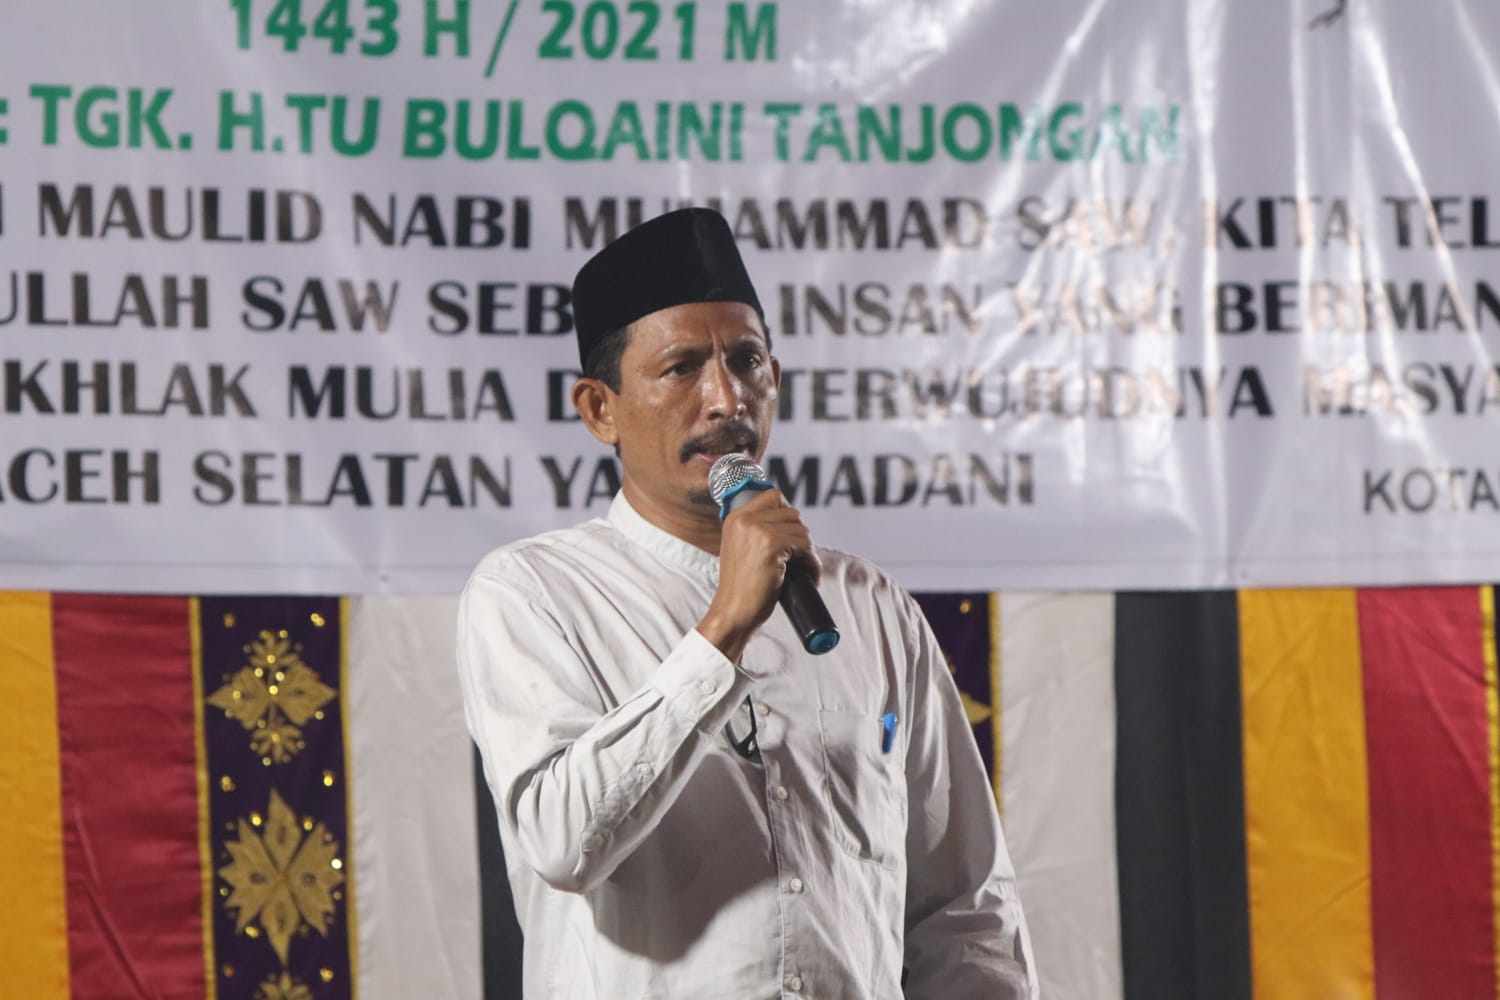 Pemkab Aceh Selatan Peringati Maulid Nabi Muhammad SAW 1443 H